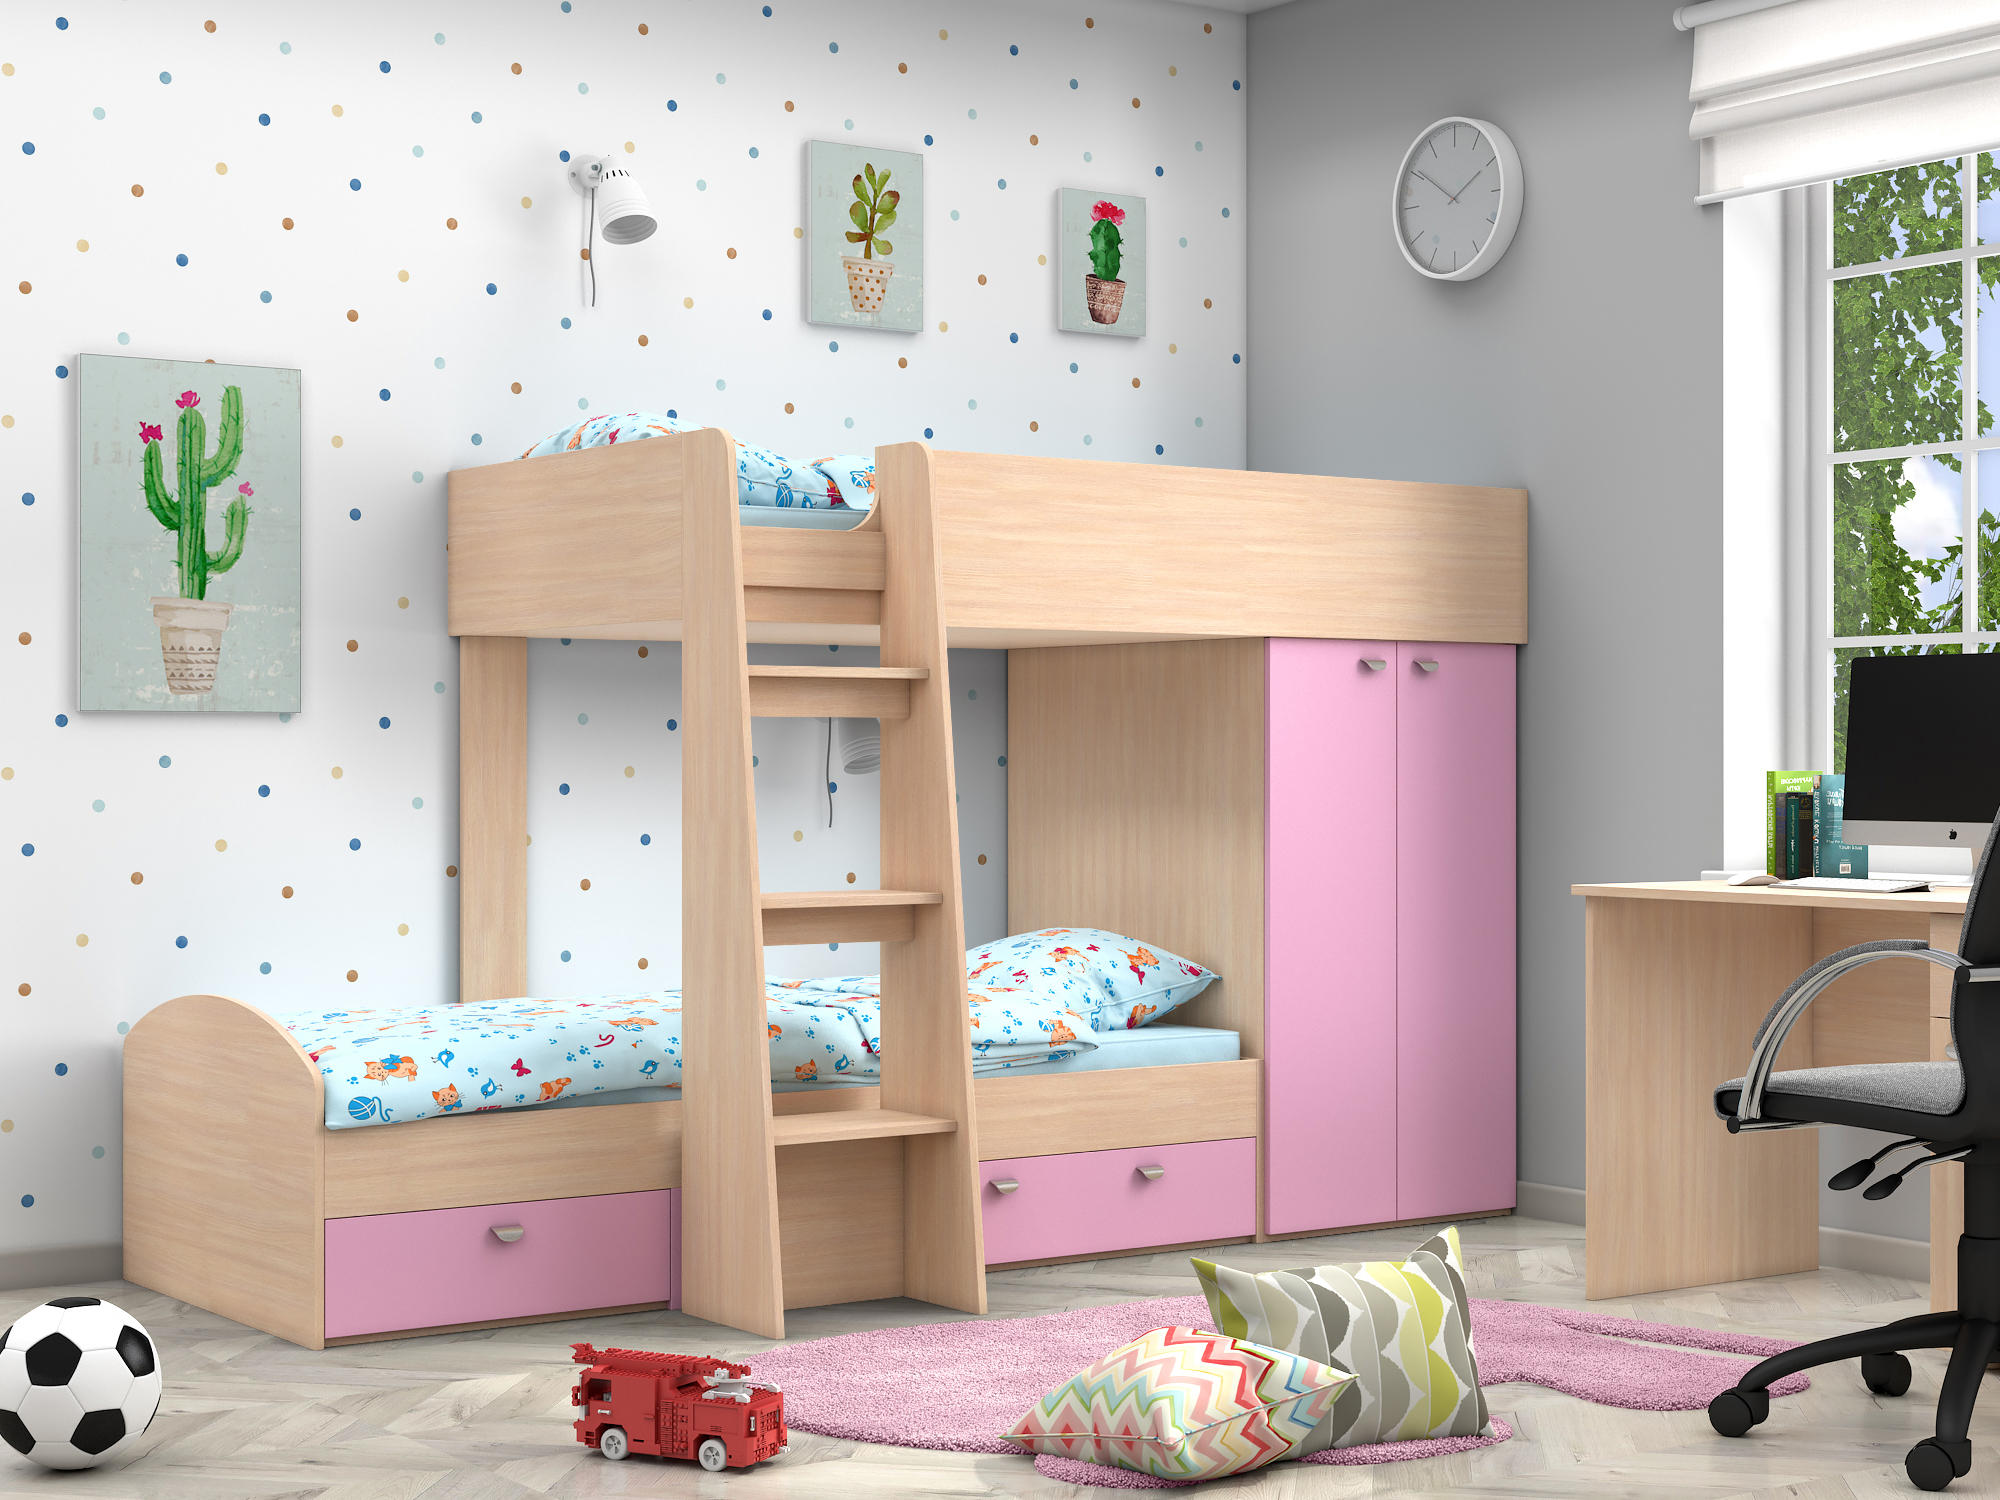 Двухъярусная кровать Golden Kids-2 (90х200) Розовый, Белый, Бежевый, ЛДСП двухъярусная кровать golden kids 2 90х200 дуб вотан бежевый лдсп